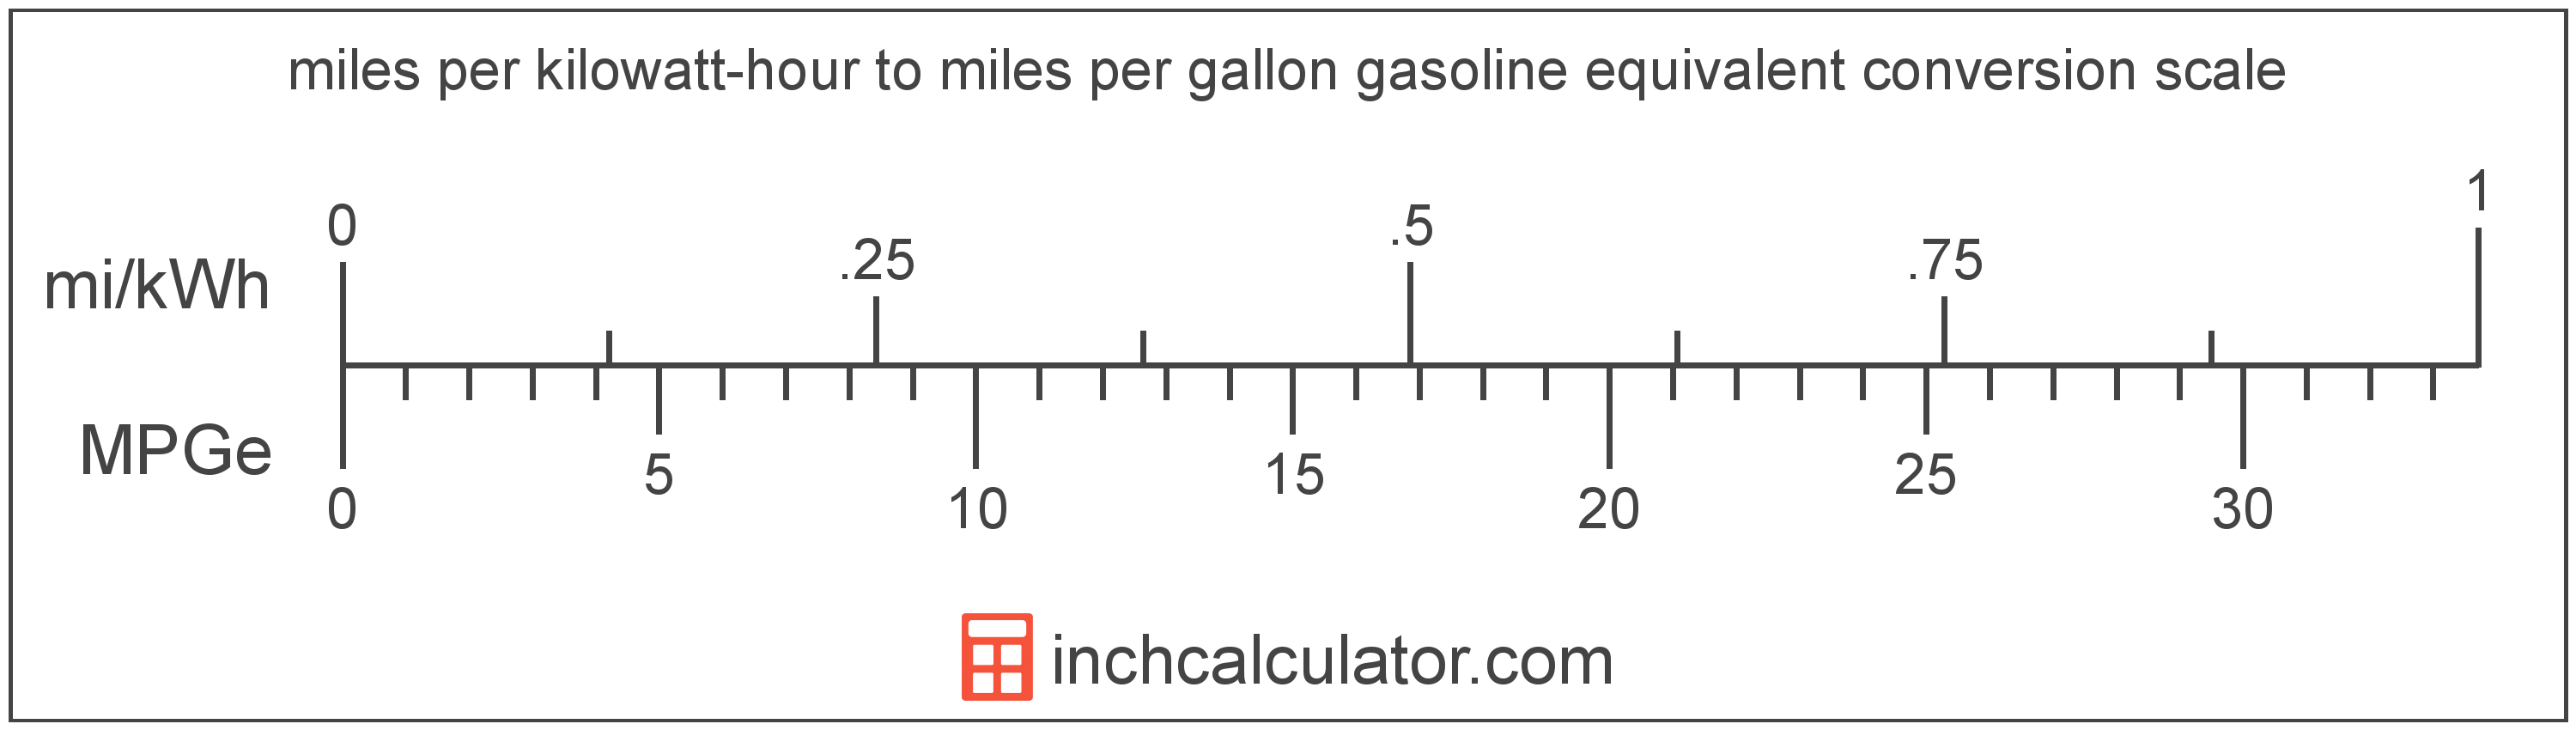 conversion scale showing miles per gallon gasoline equivalent and equivalent miles per kilowatt-hour electric car efficiency values